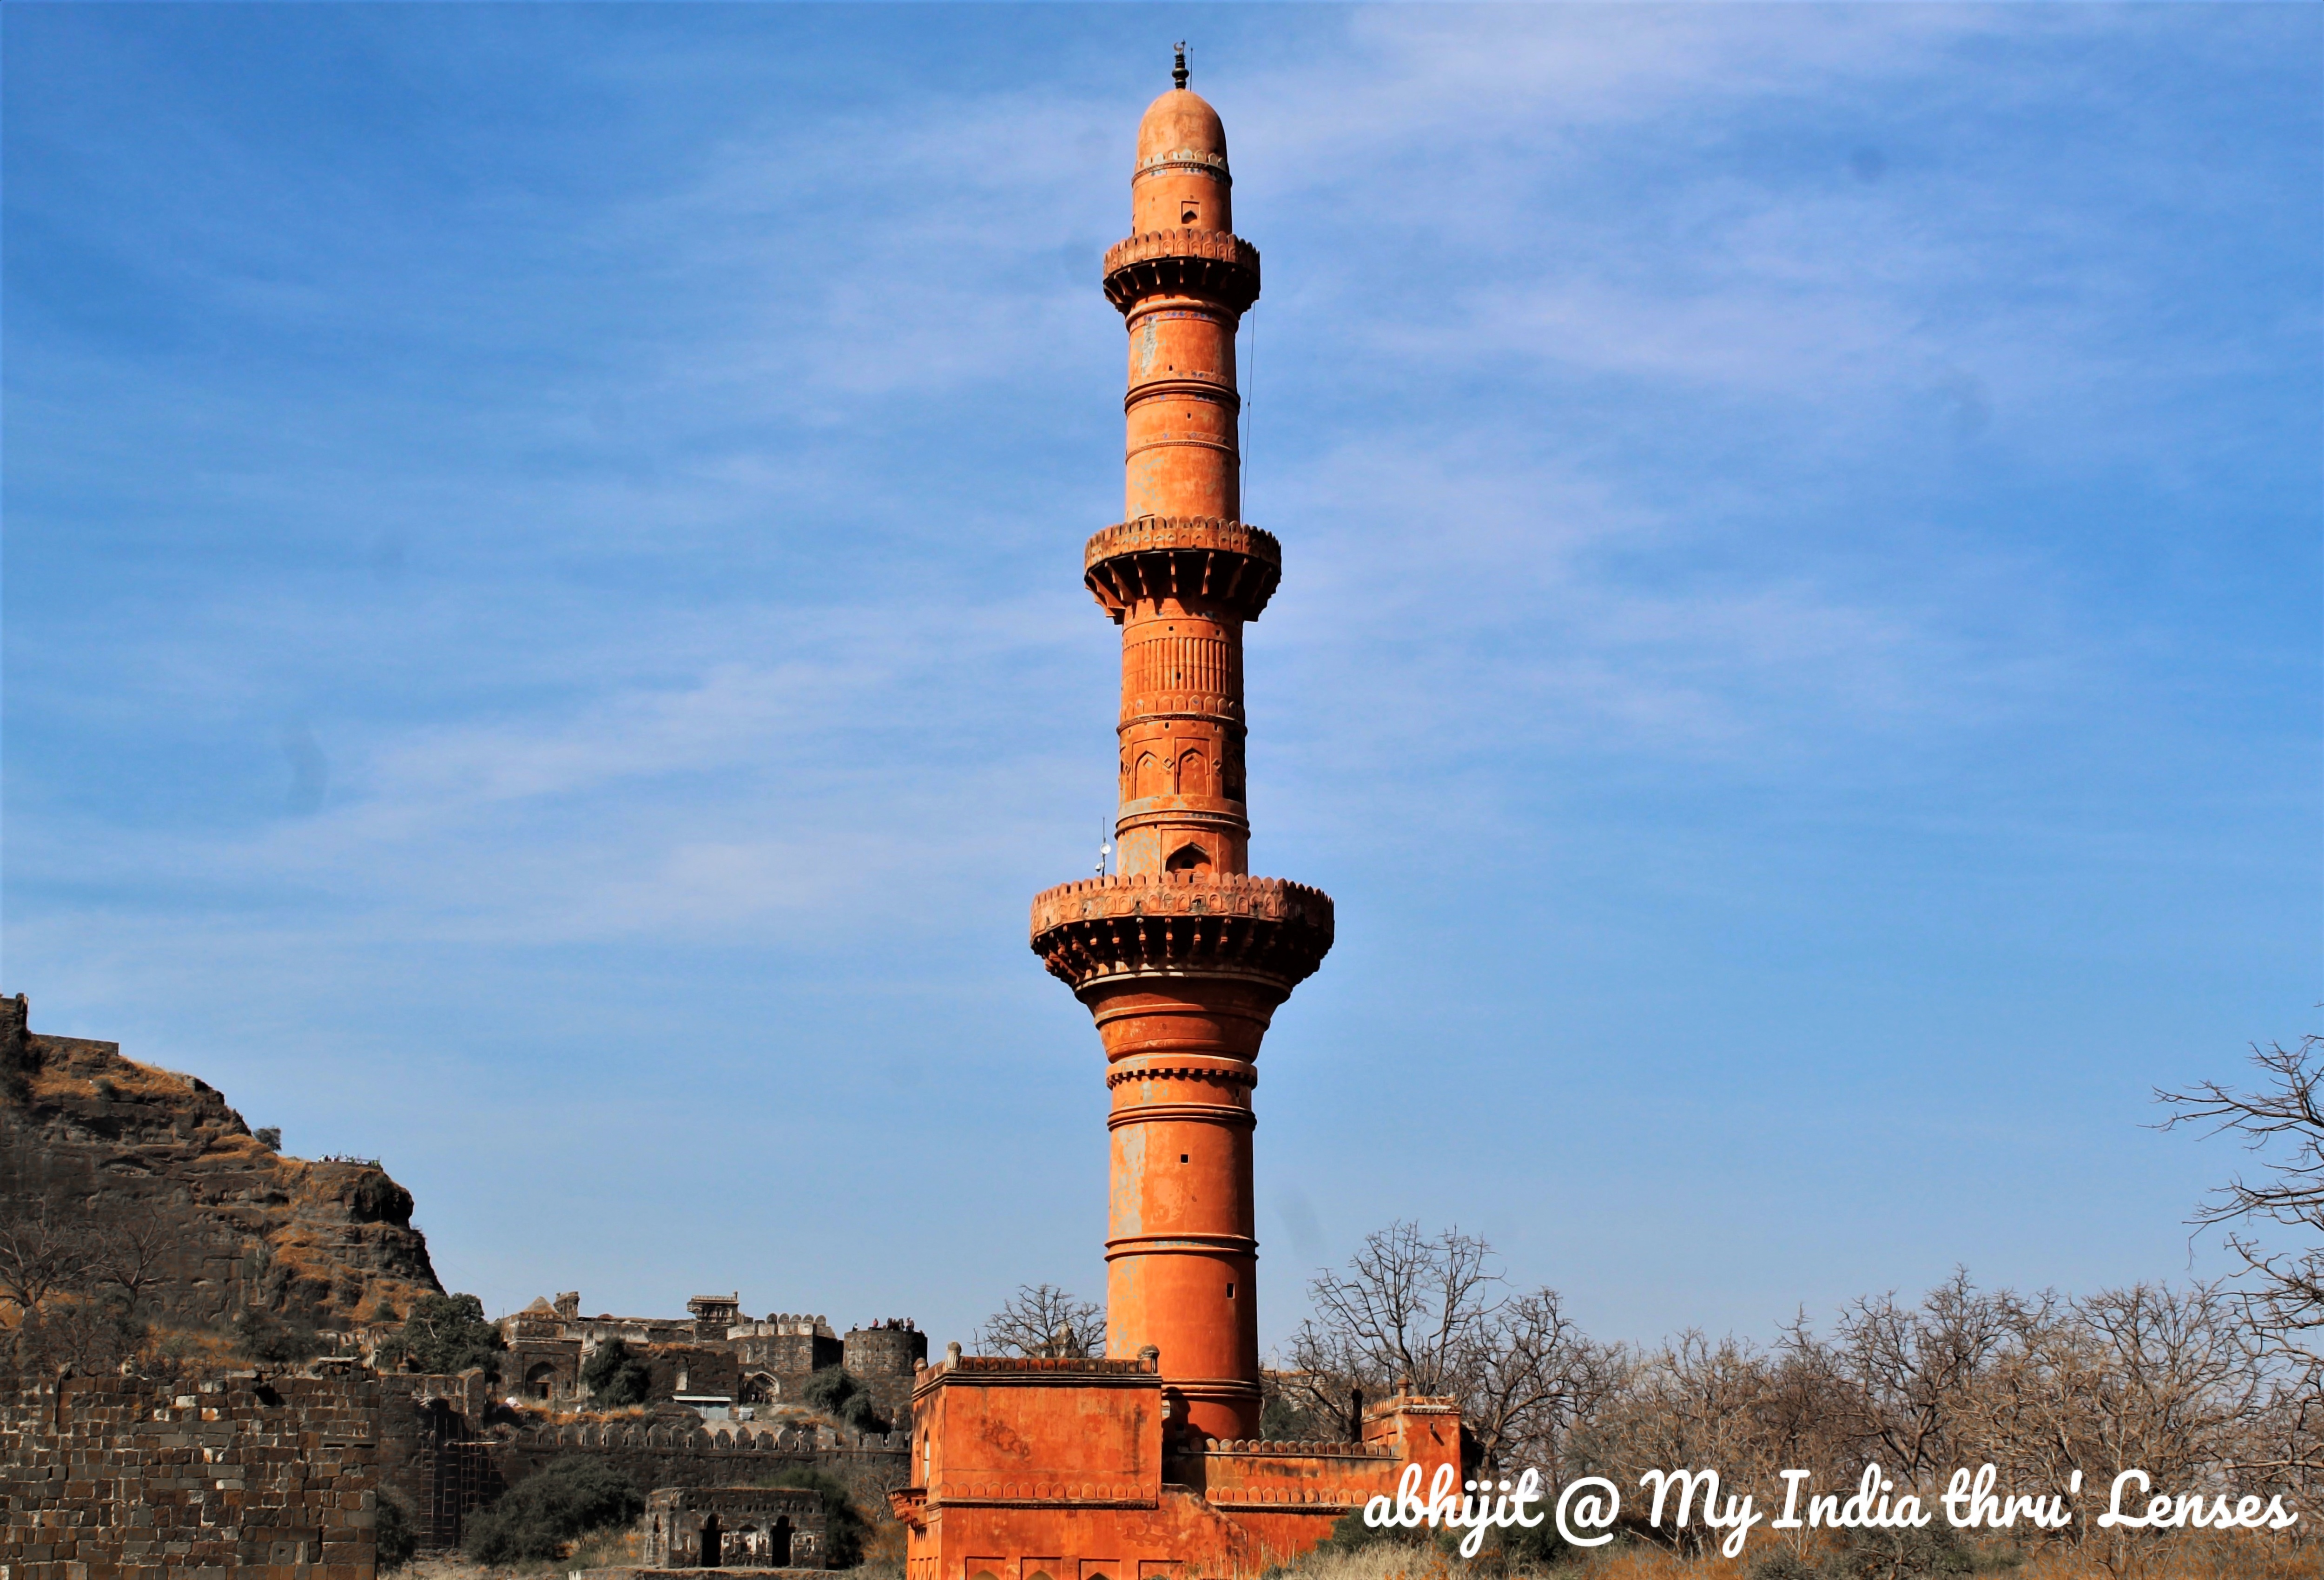 The Chand Minar